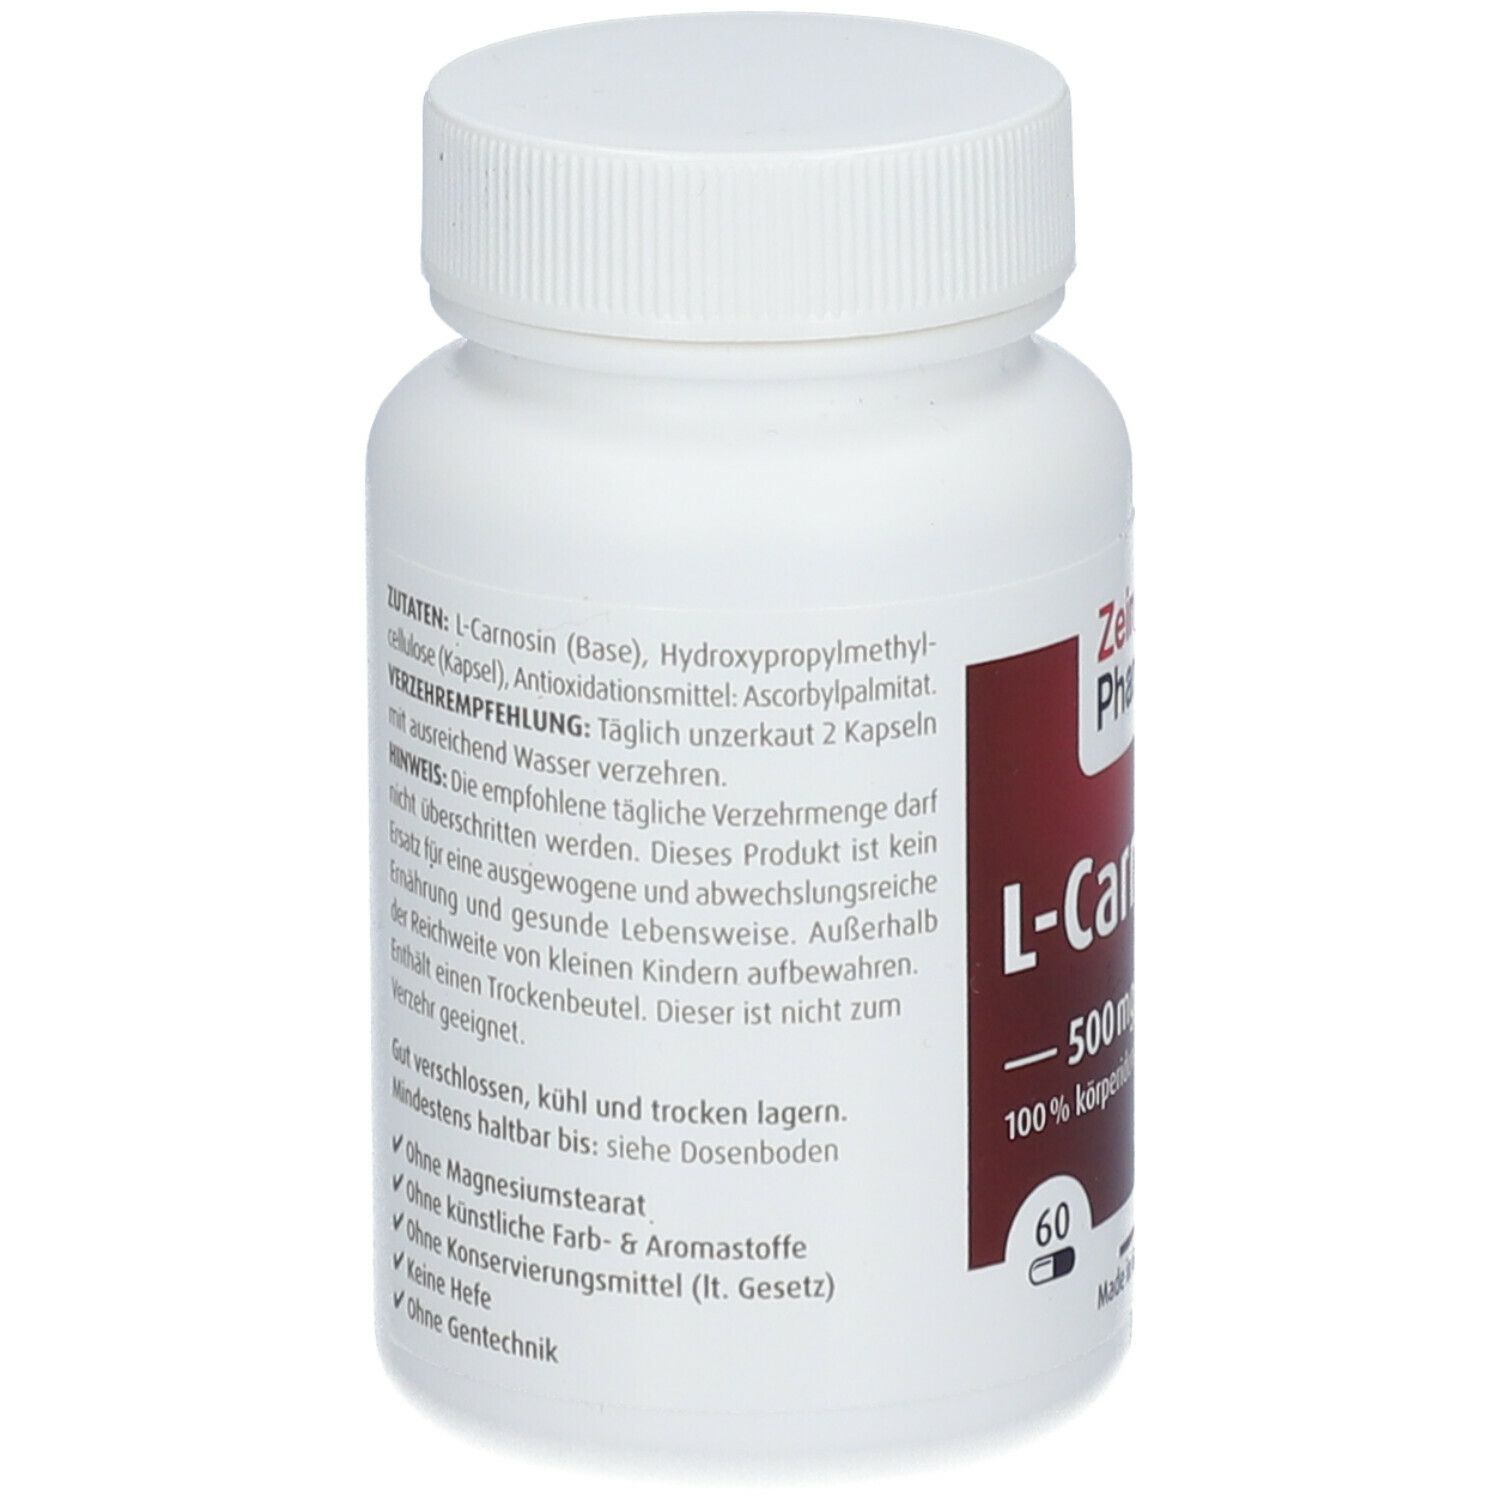 ZeinPharma® L Carnosin Kapseln 500 mg